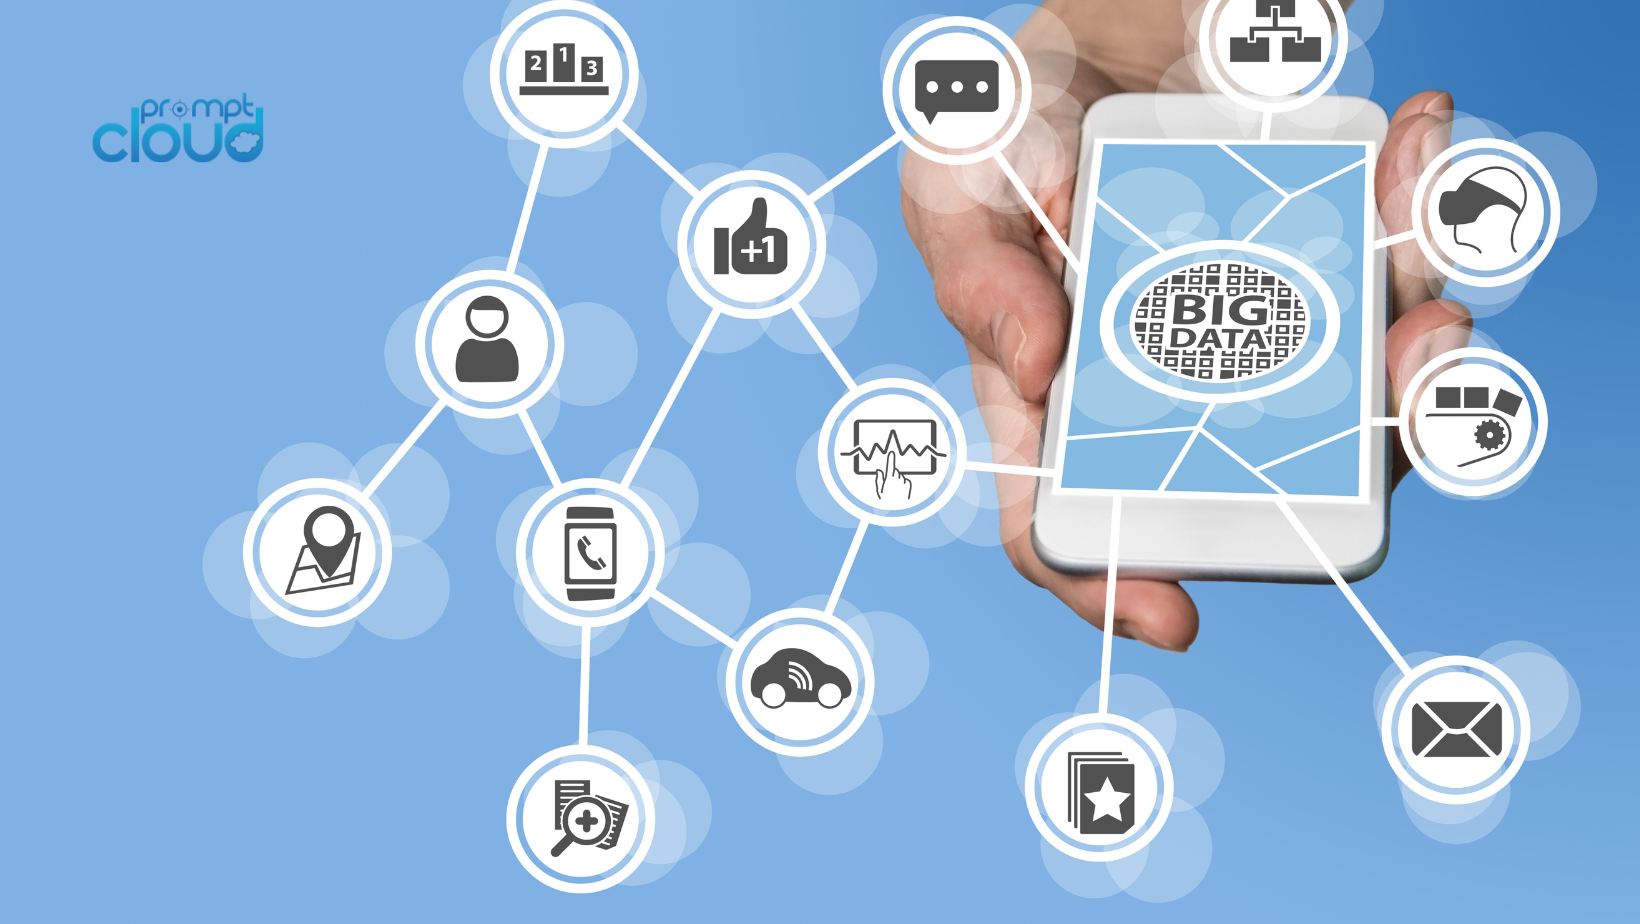 big data as a service market